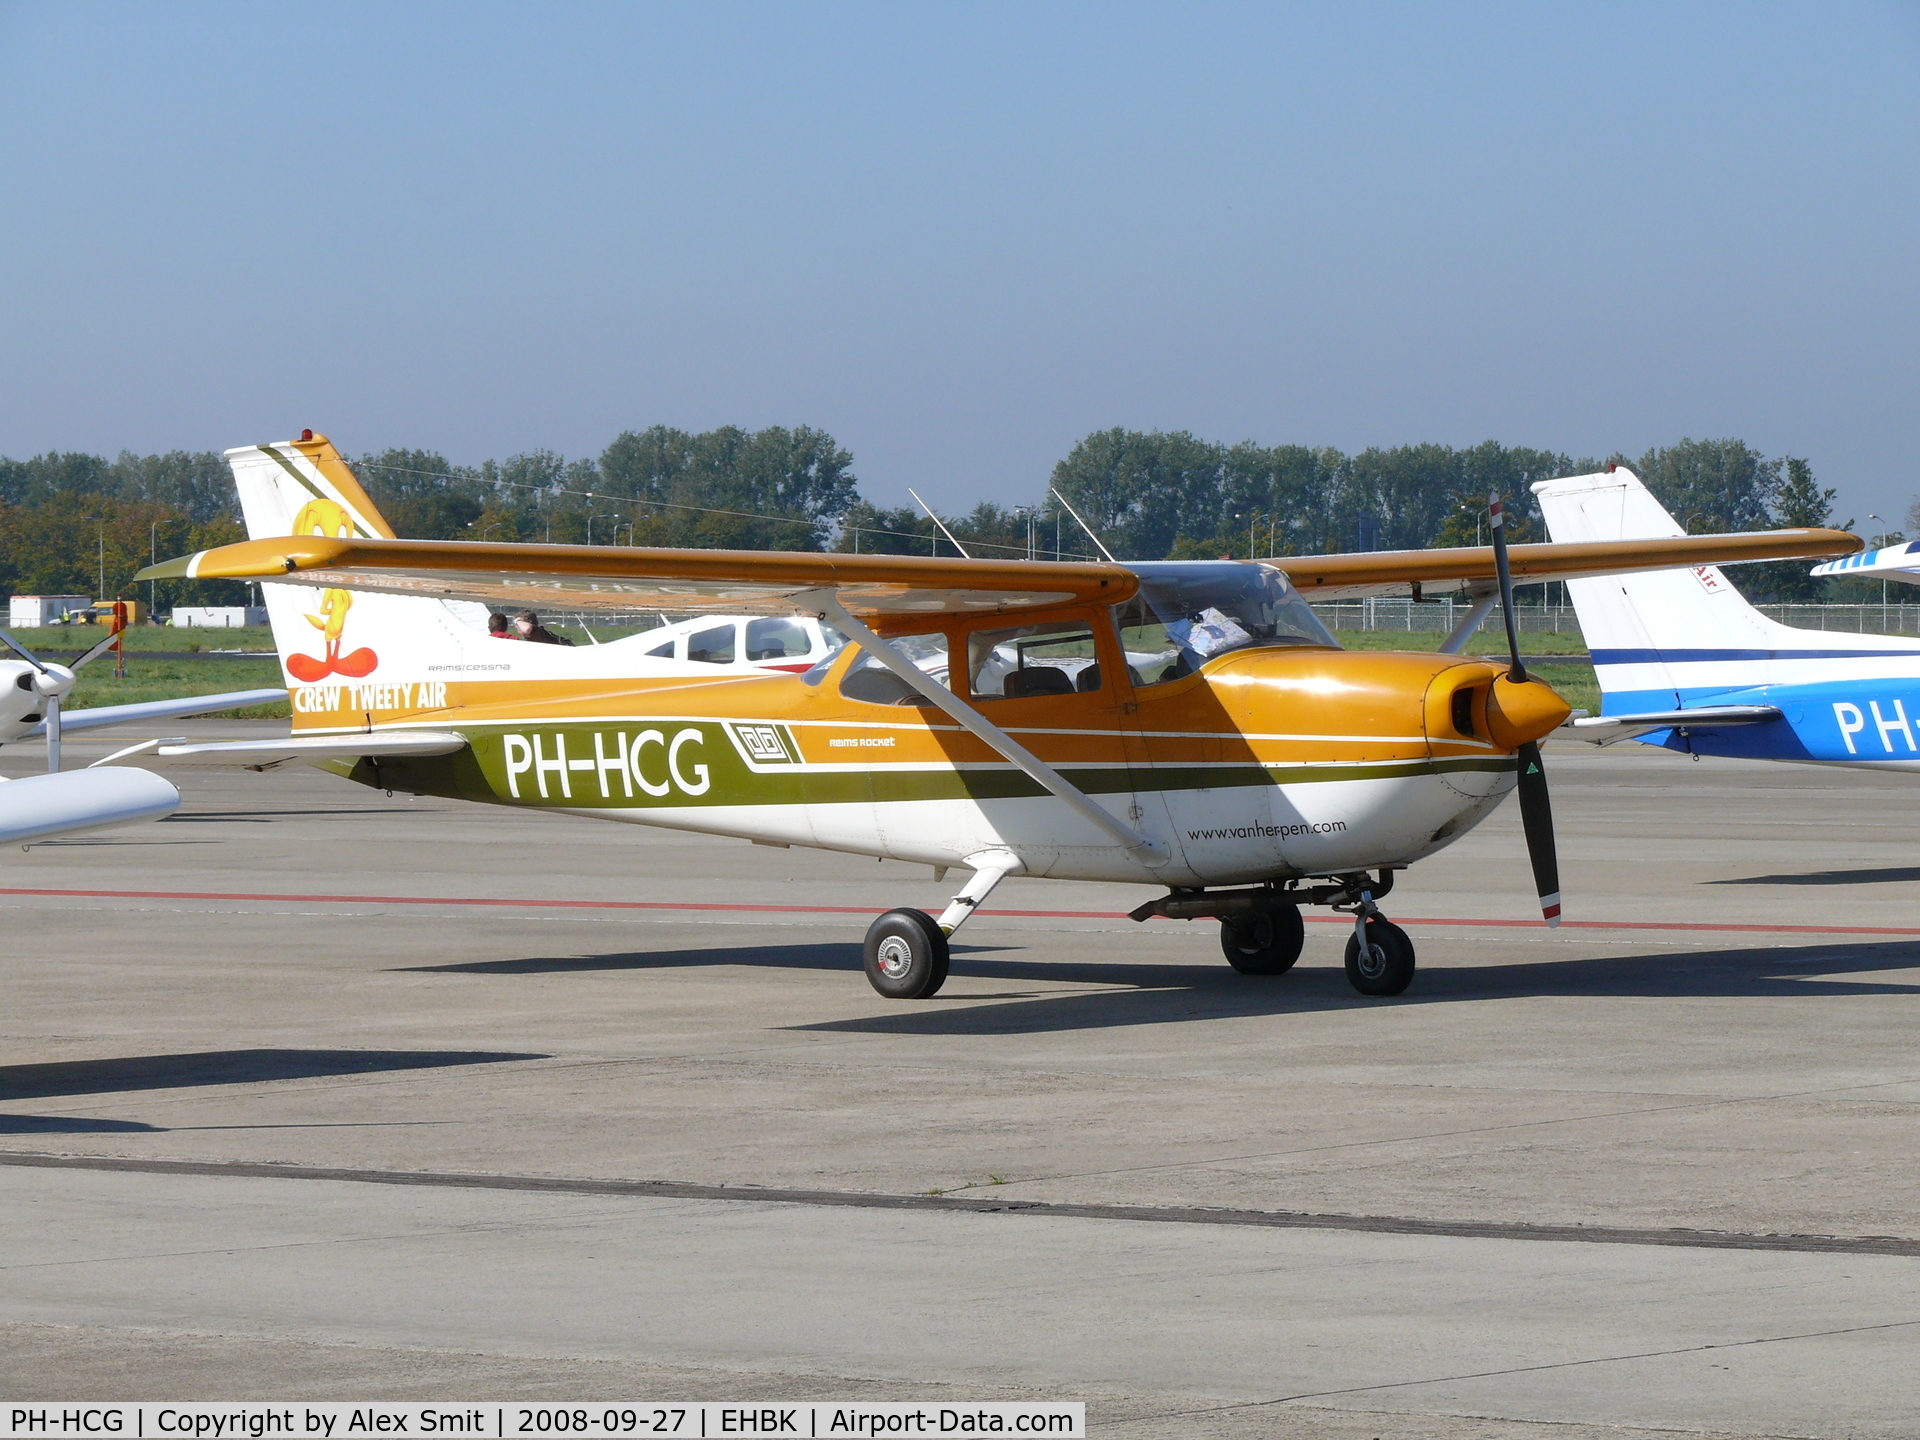 PH-HCG, Reims FR172J Reims Rocket C/N 0400, Cessna CFR172J Skyhawk PH-HCG